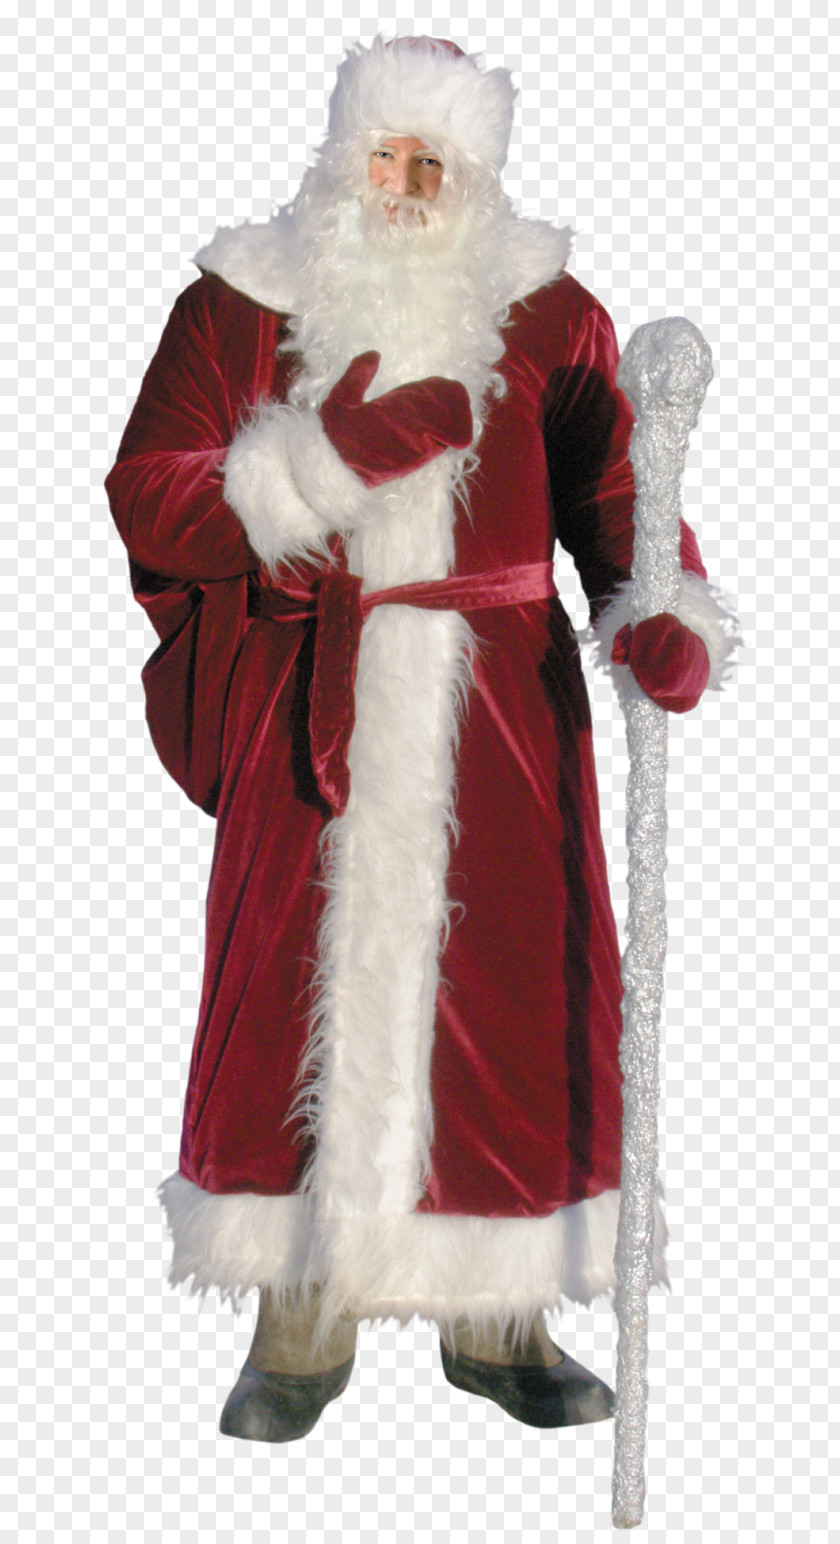 Santa Claus Ded Moroz Snegurochka Costume Christmas PNG